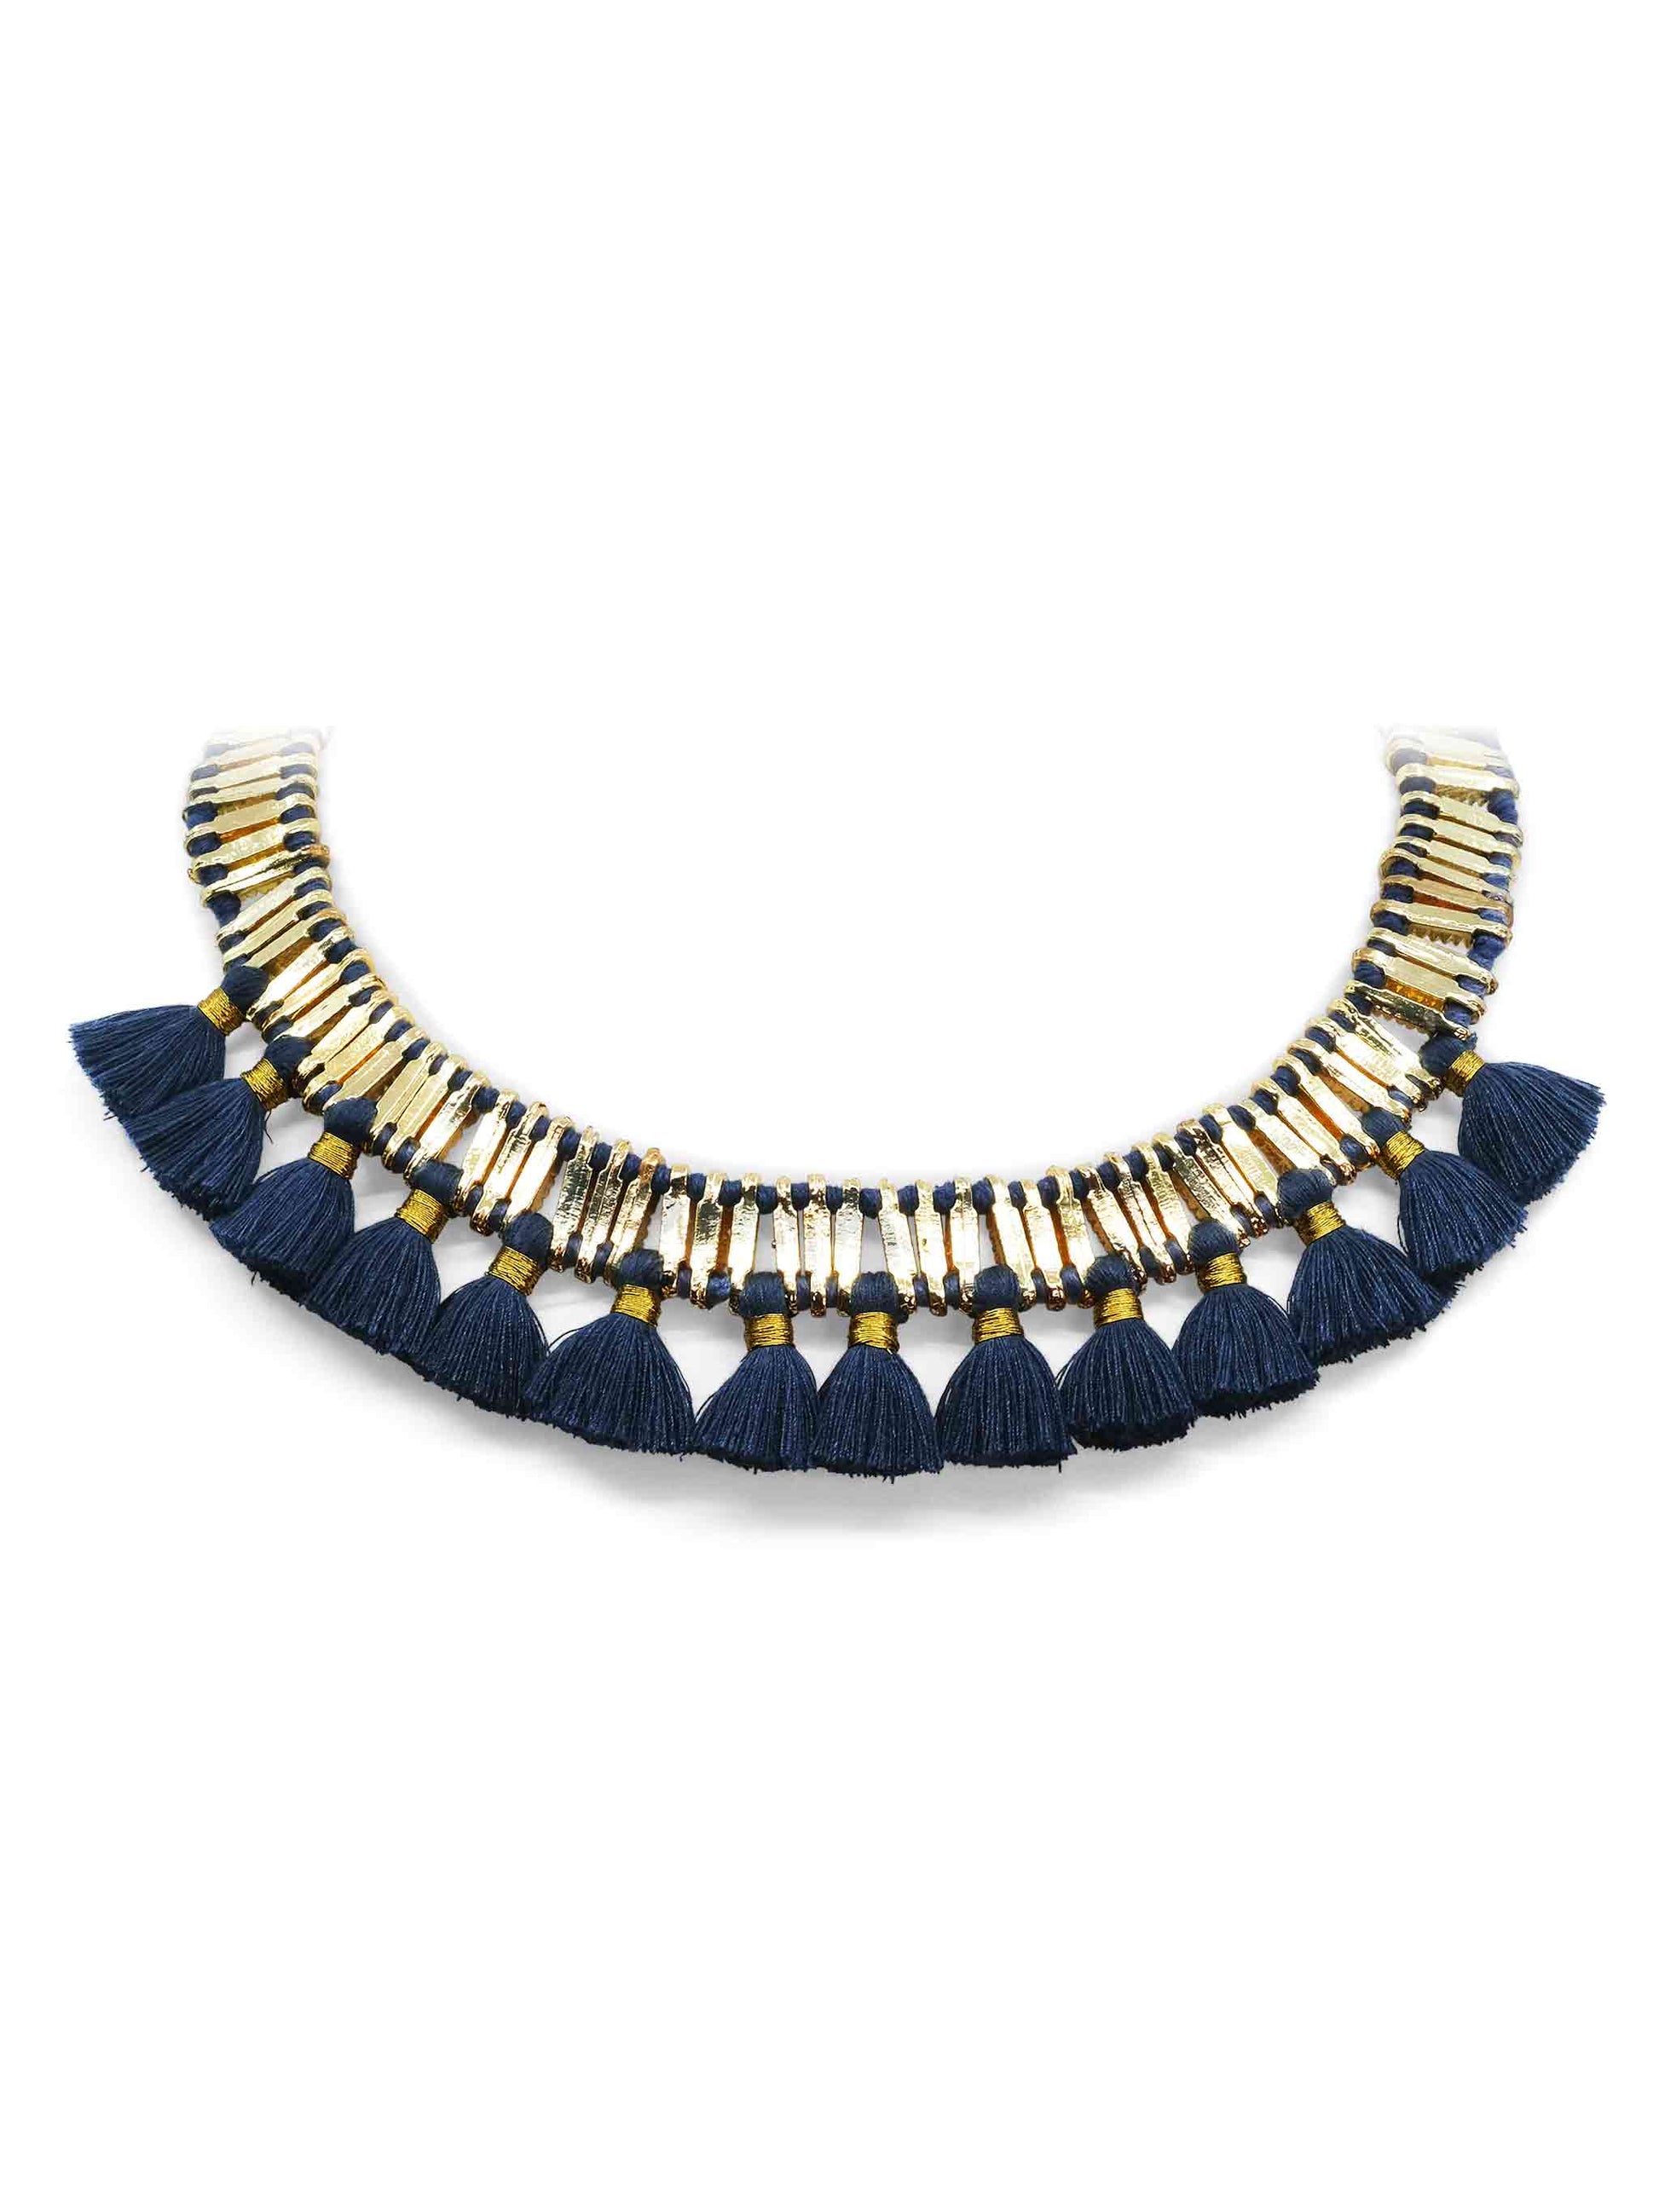 Women's Qabeela Tassel Choker Necklace Navy & Gold Tone